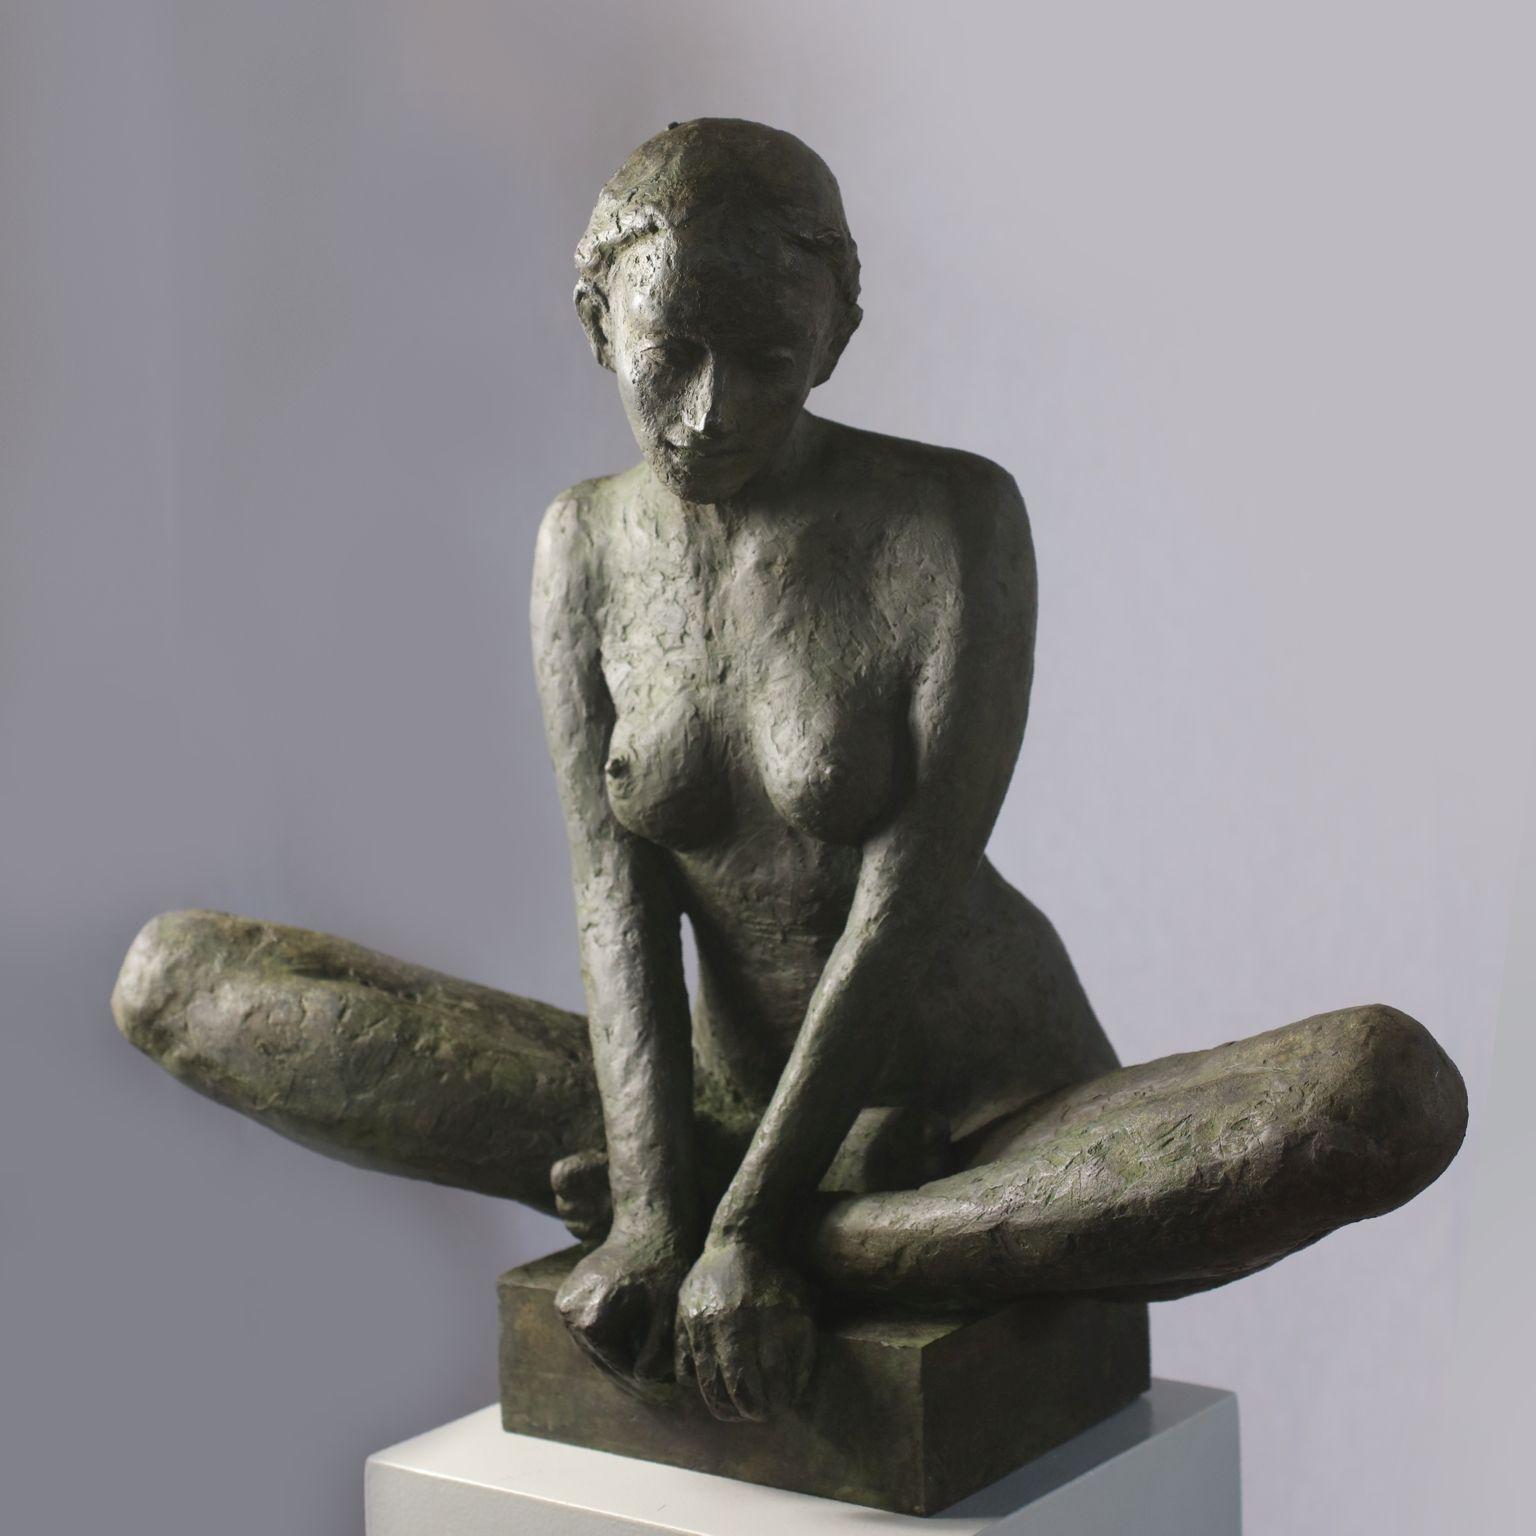 Middle - popular contemporary nude female bronze sculpture in meditative pose